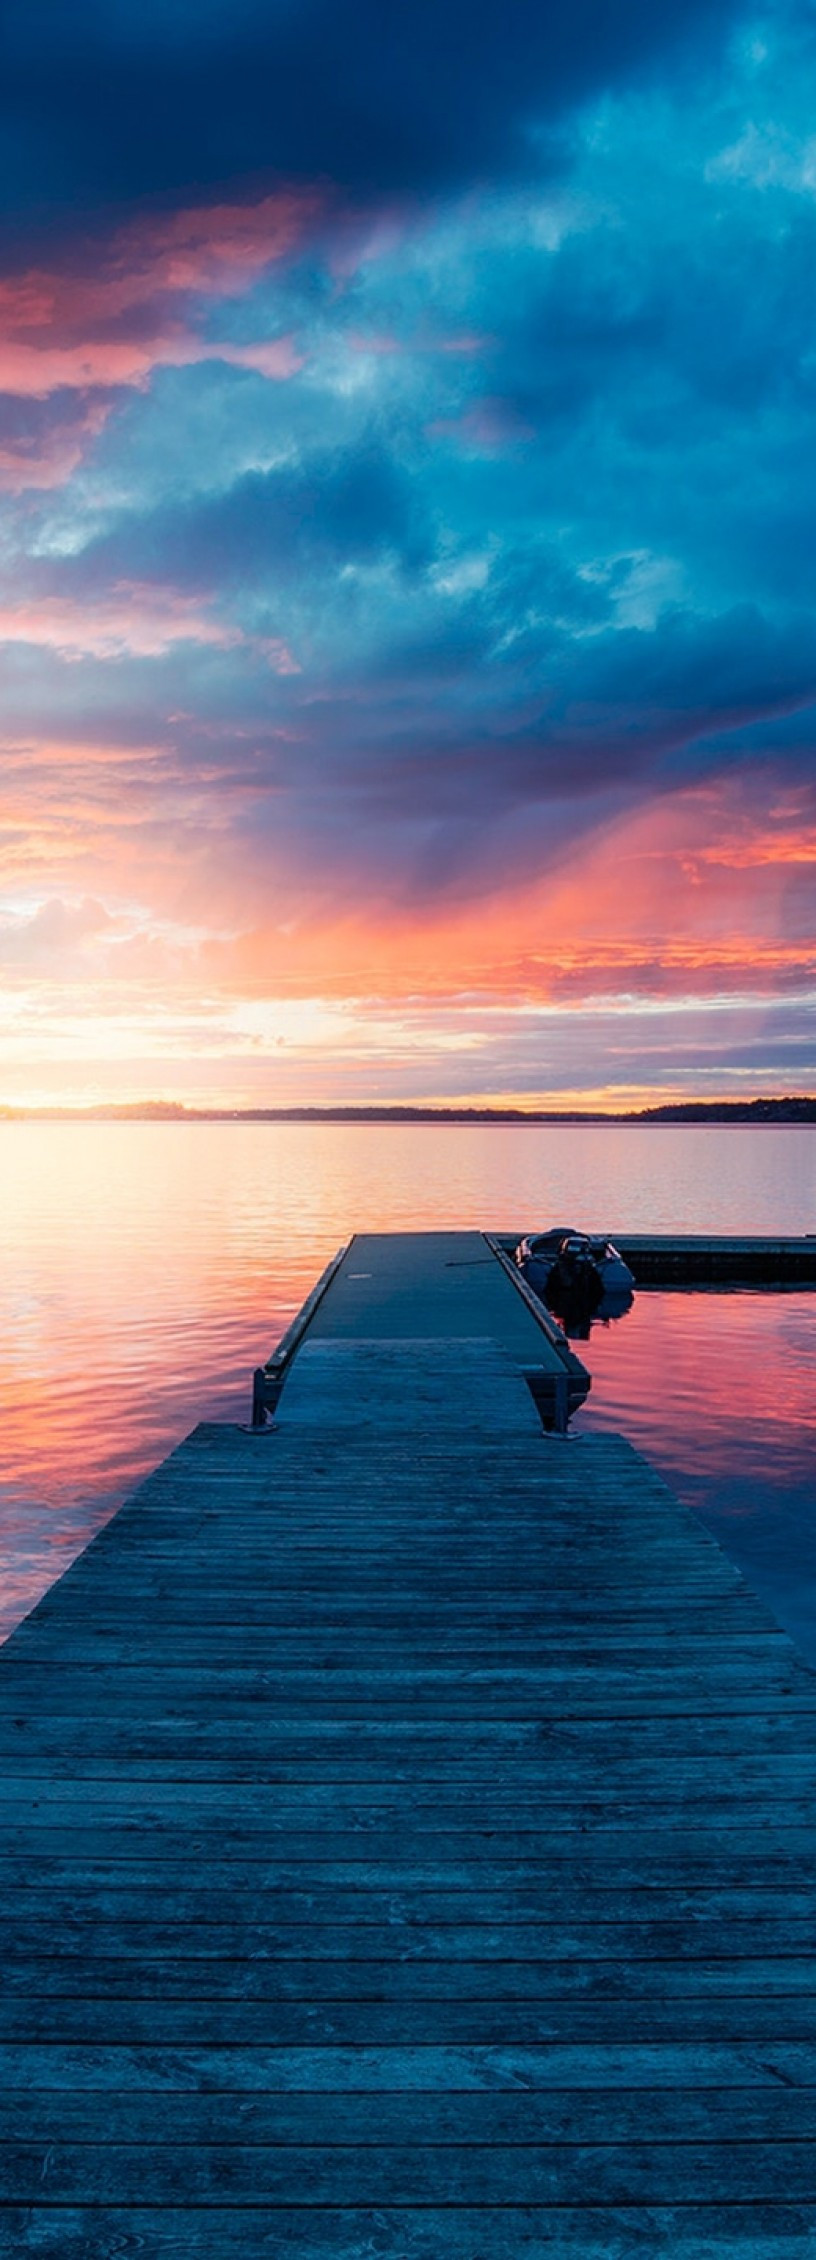 Download 816x2260 Scenic, Sunset, Lake, Pier, Pretty Sky Wallpaper for Samsung Galaxy Z Fold2